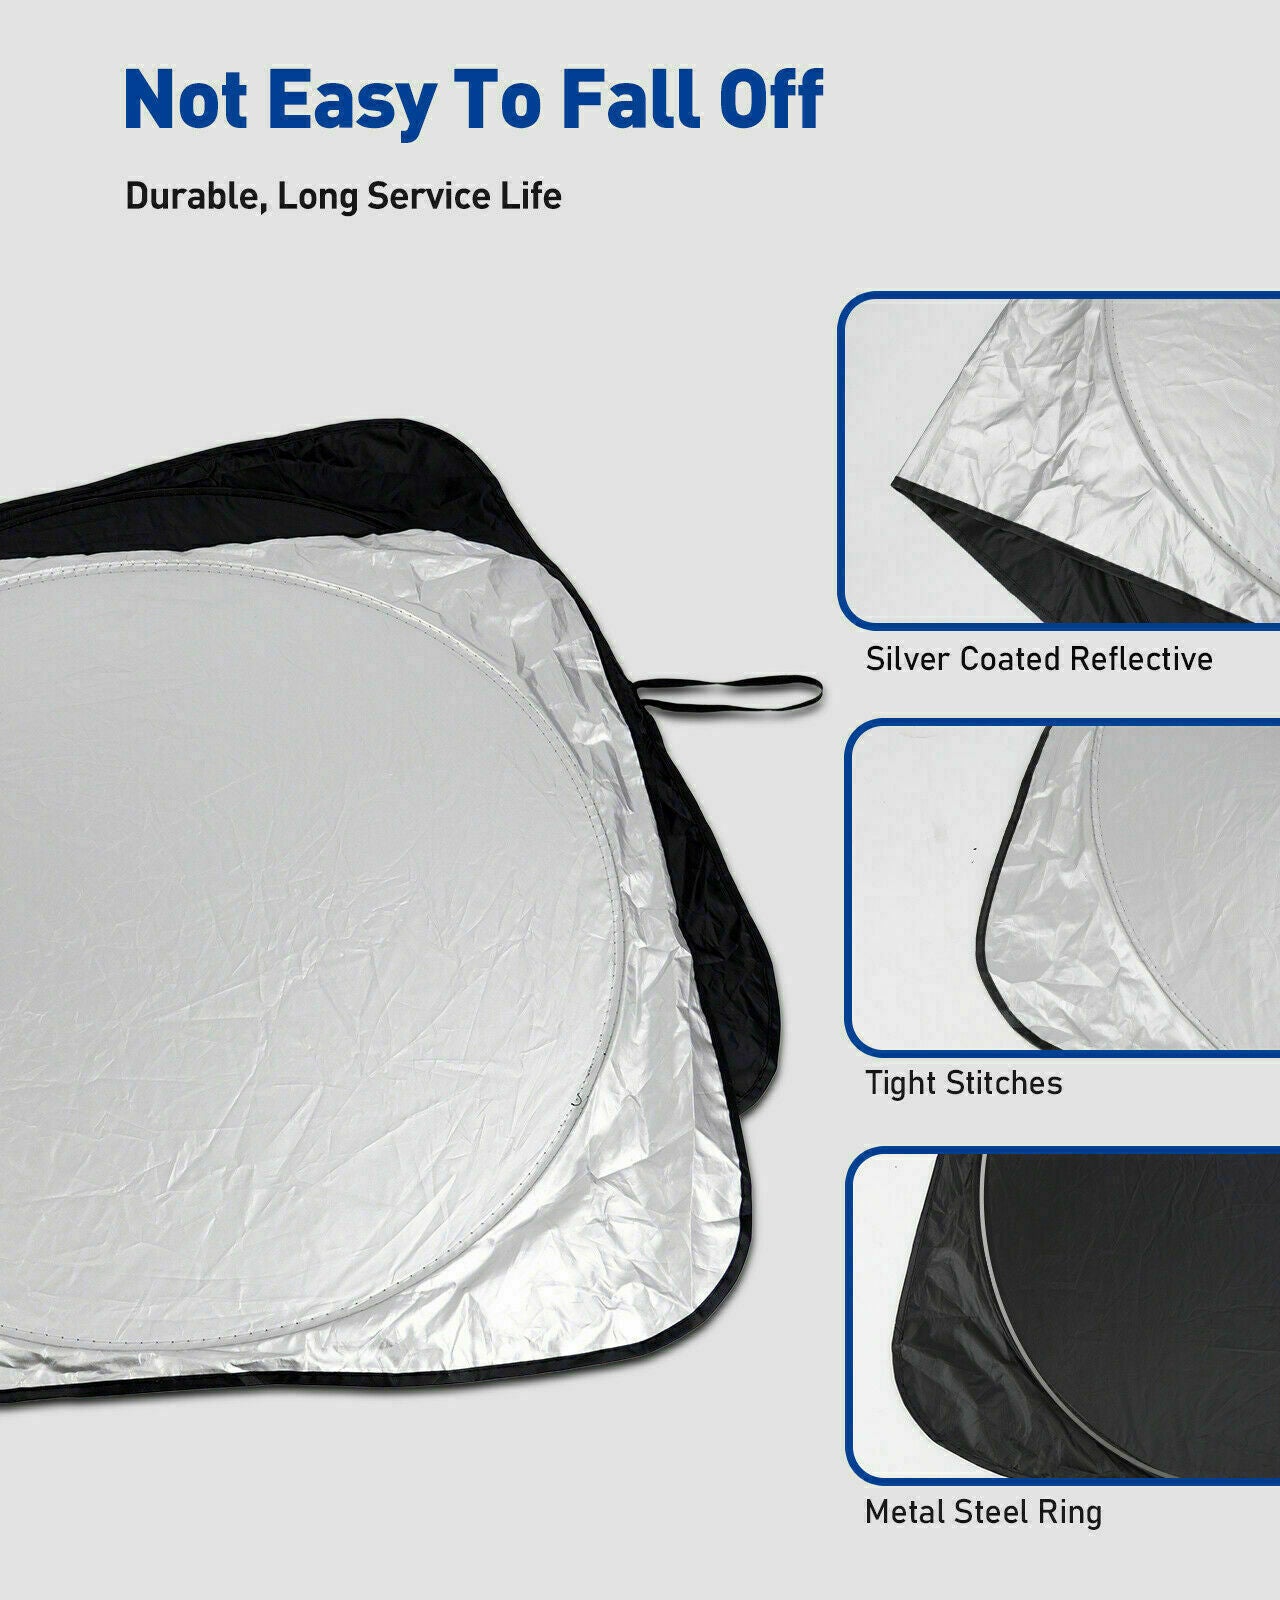 Car Shield Cover Visor UV Block Rear Front Foldable Windshield Window Sun Shade